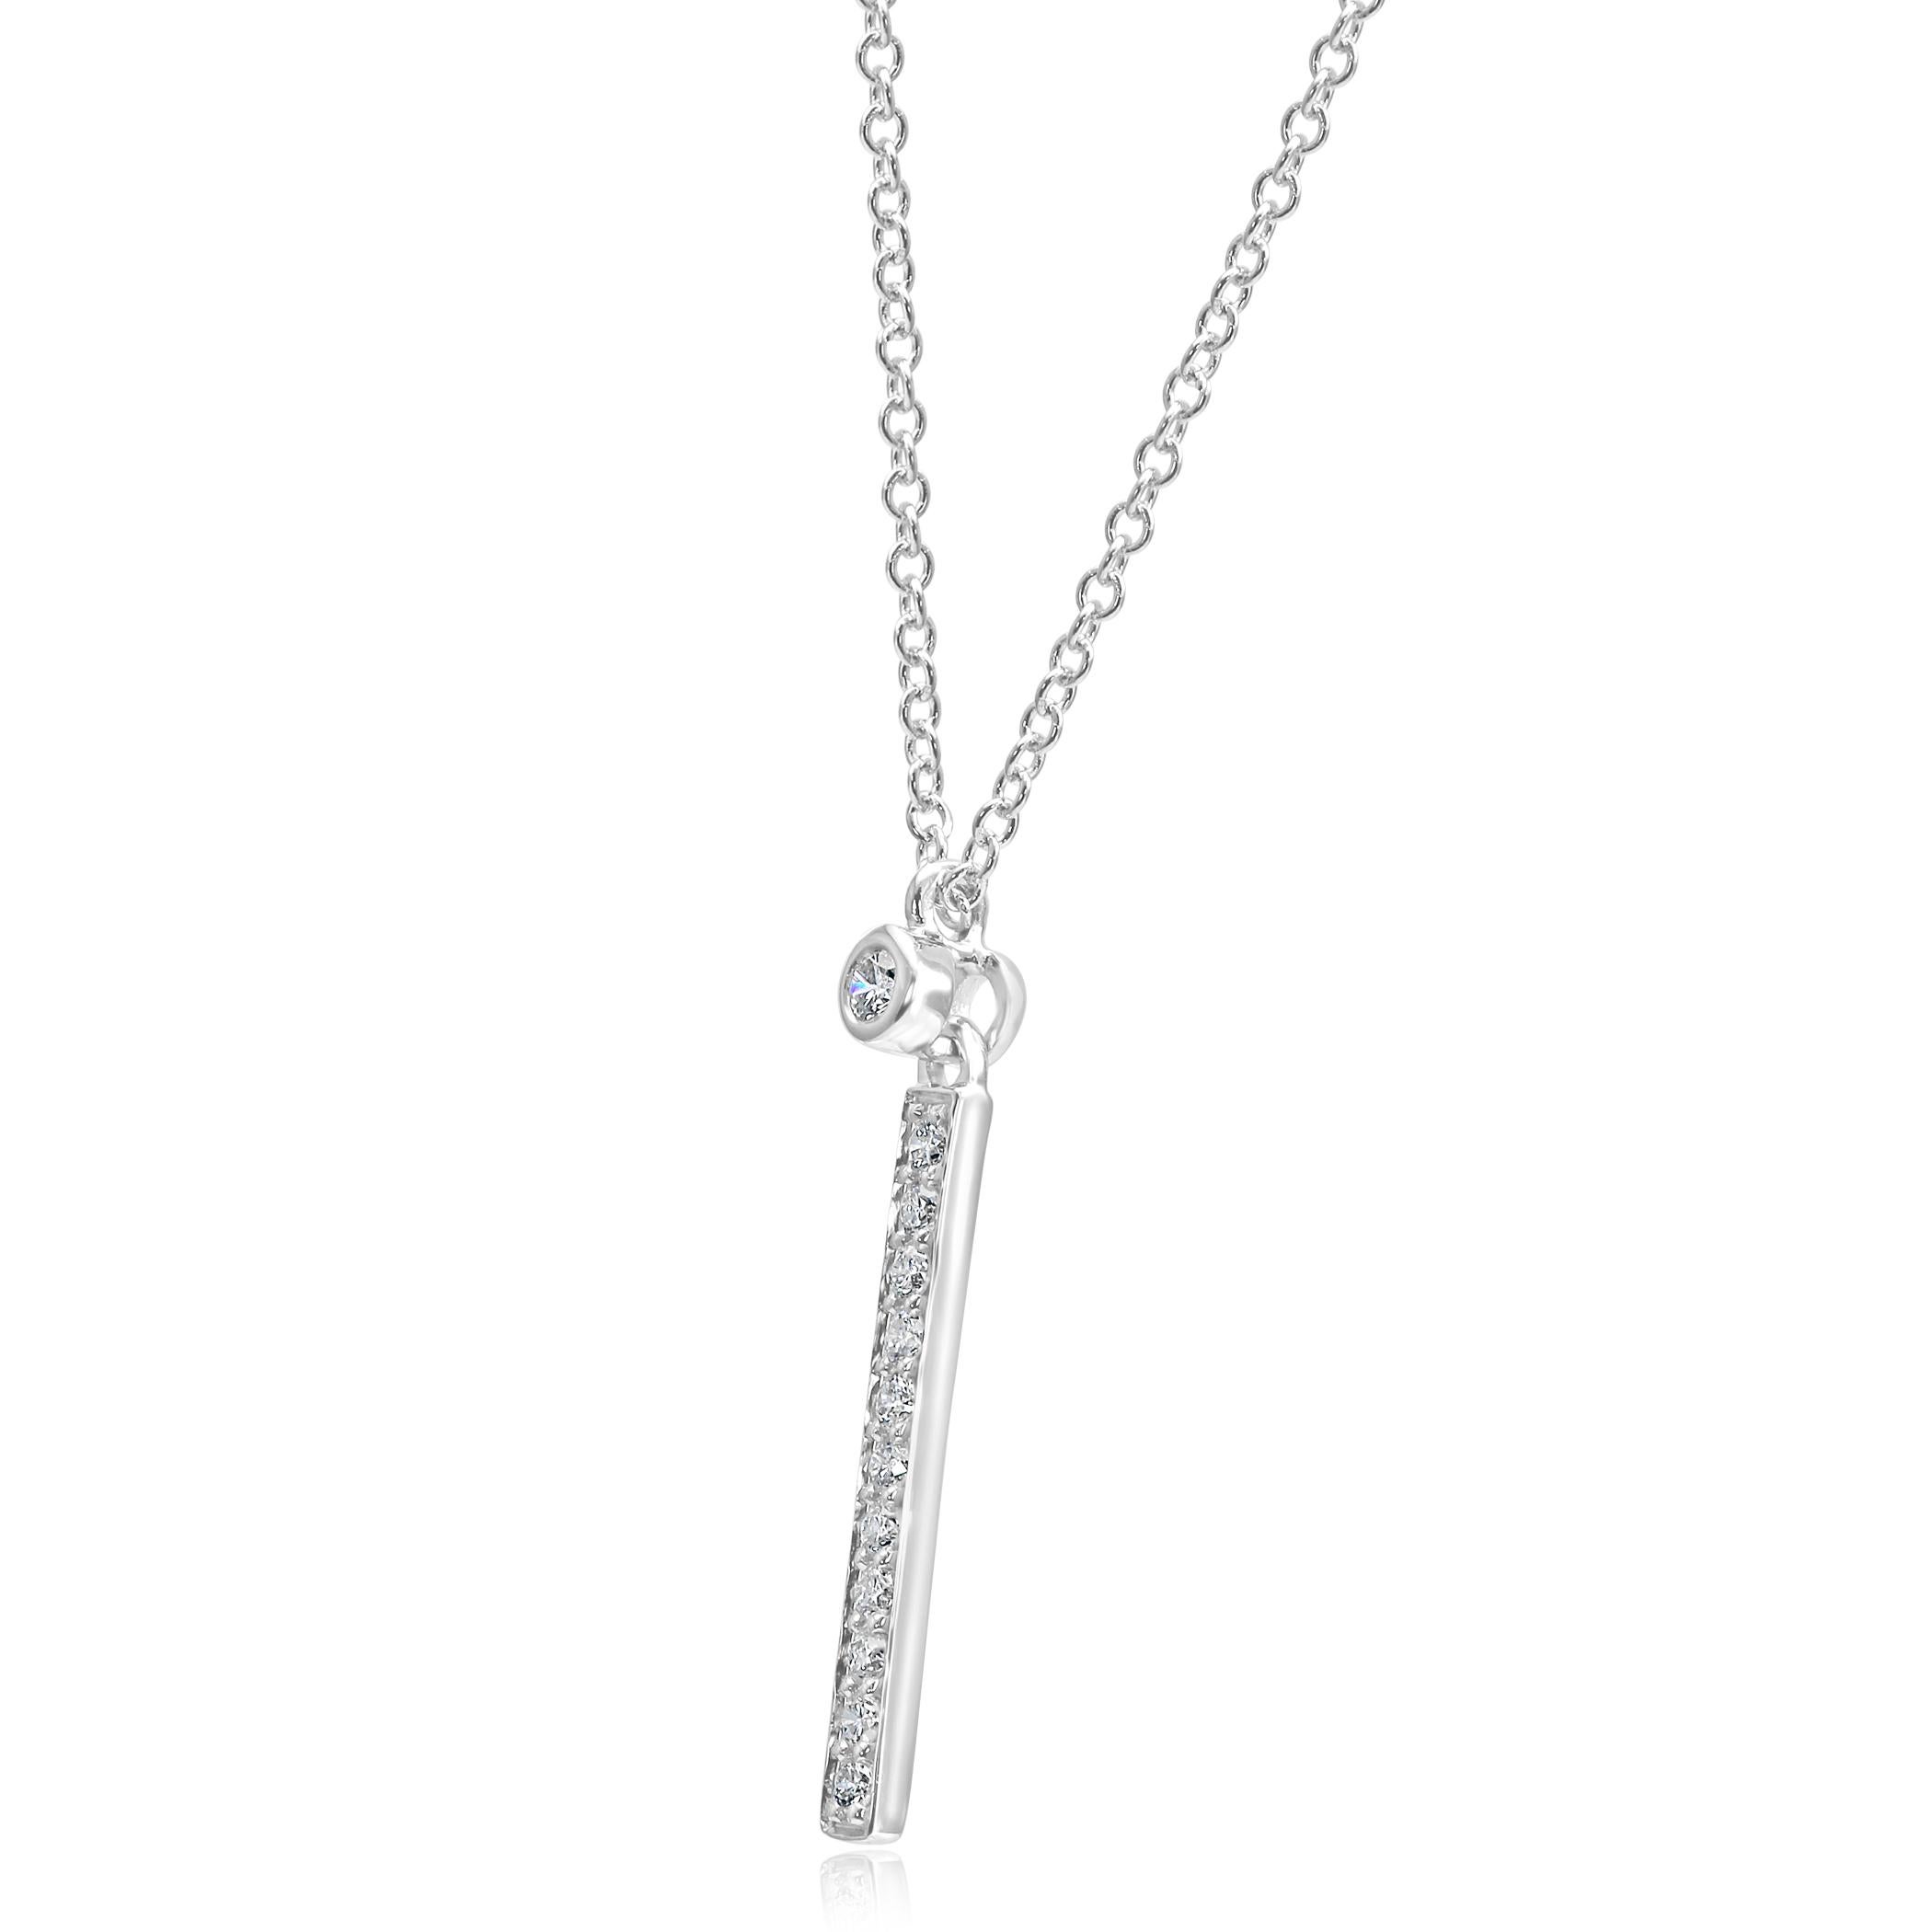 Contemporary White Diamond Rounds Bar Drop Fashion Pendant 14 Karat White Gold Chain Necklace